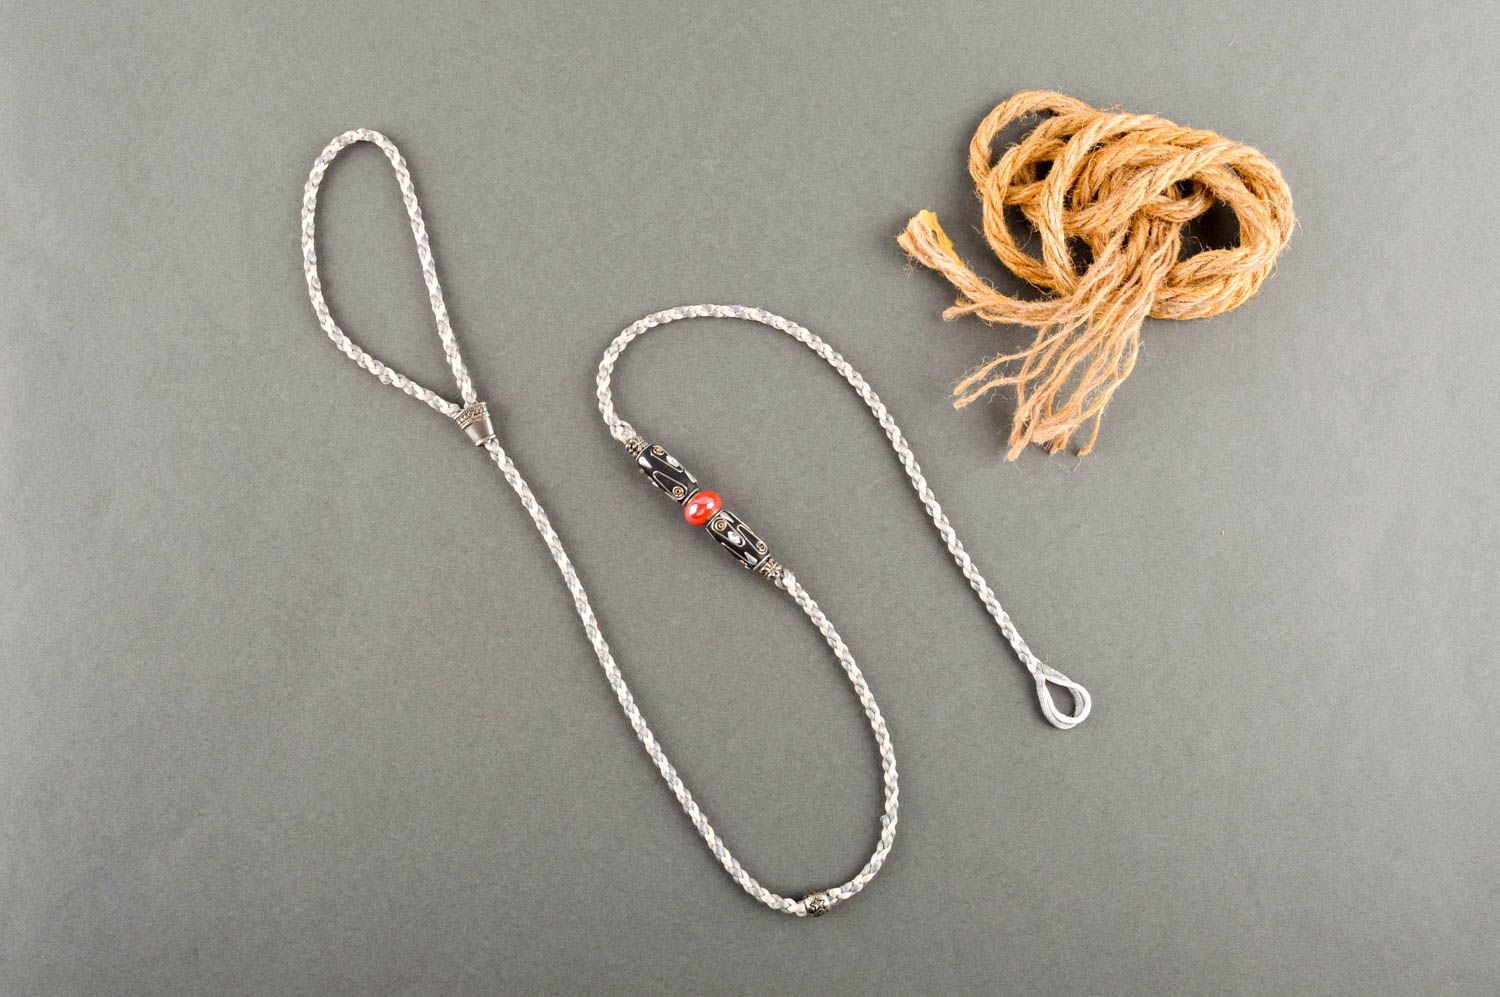 Handmade leash designer leash unusual leash for cat leash for dogs gift ideas photo 1